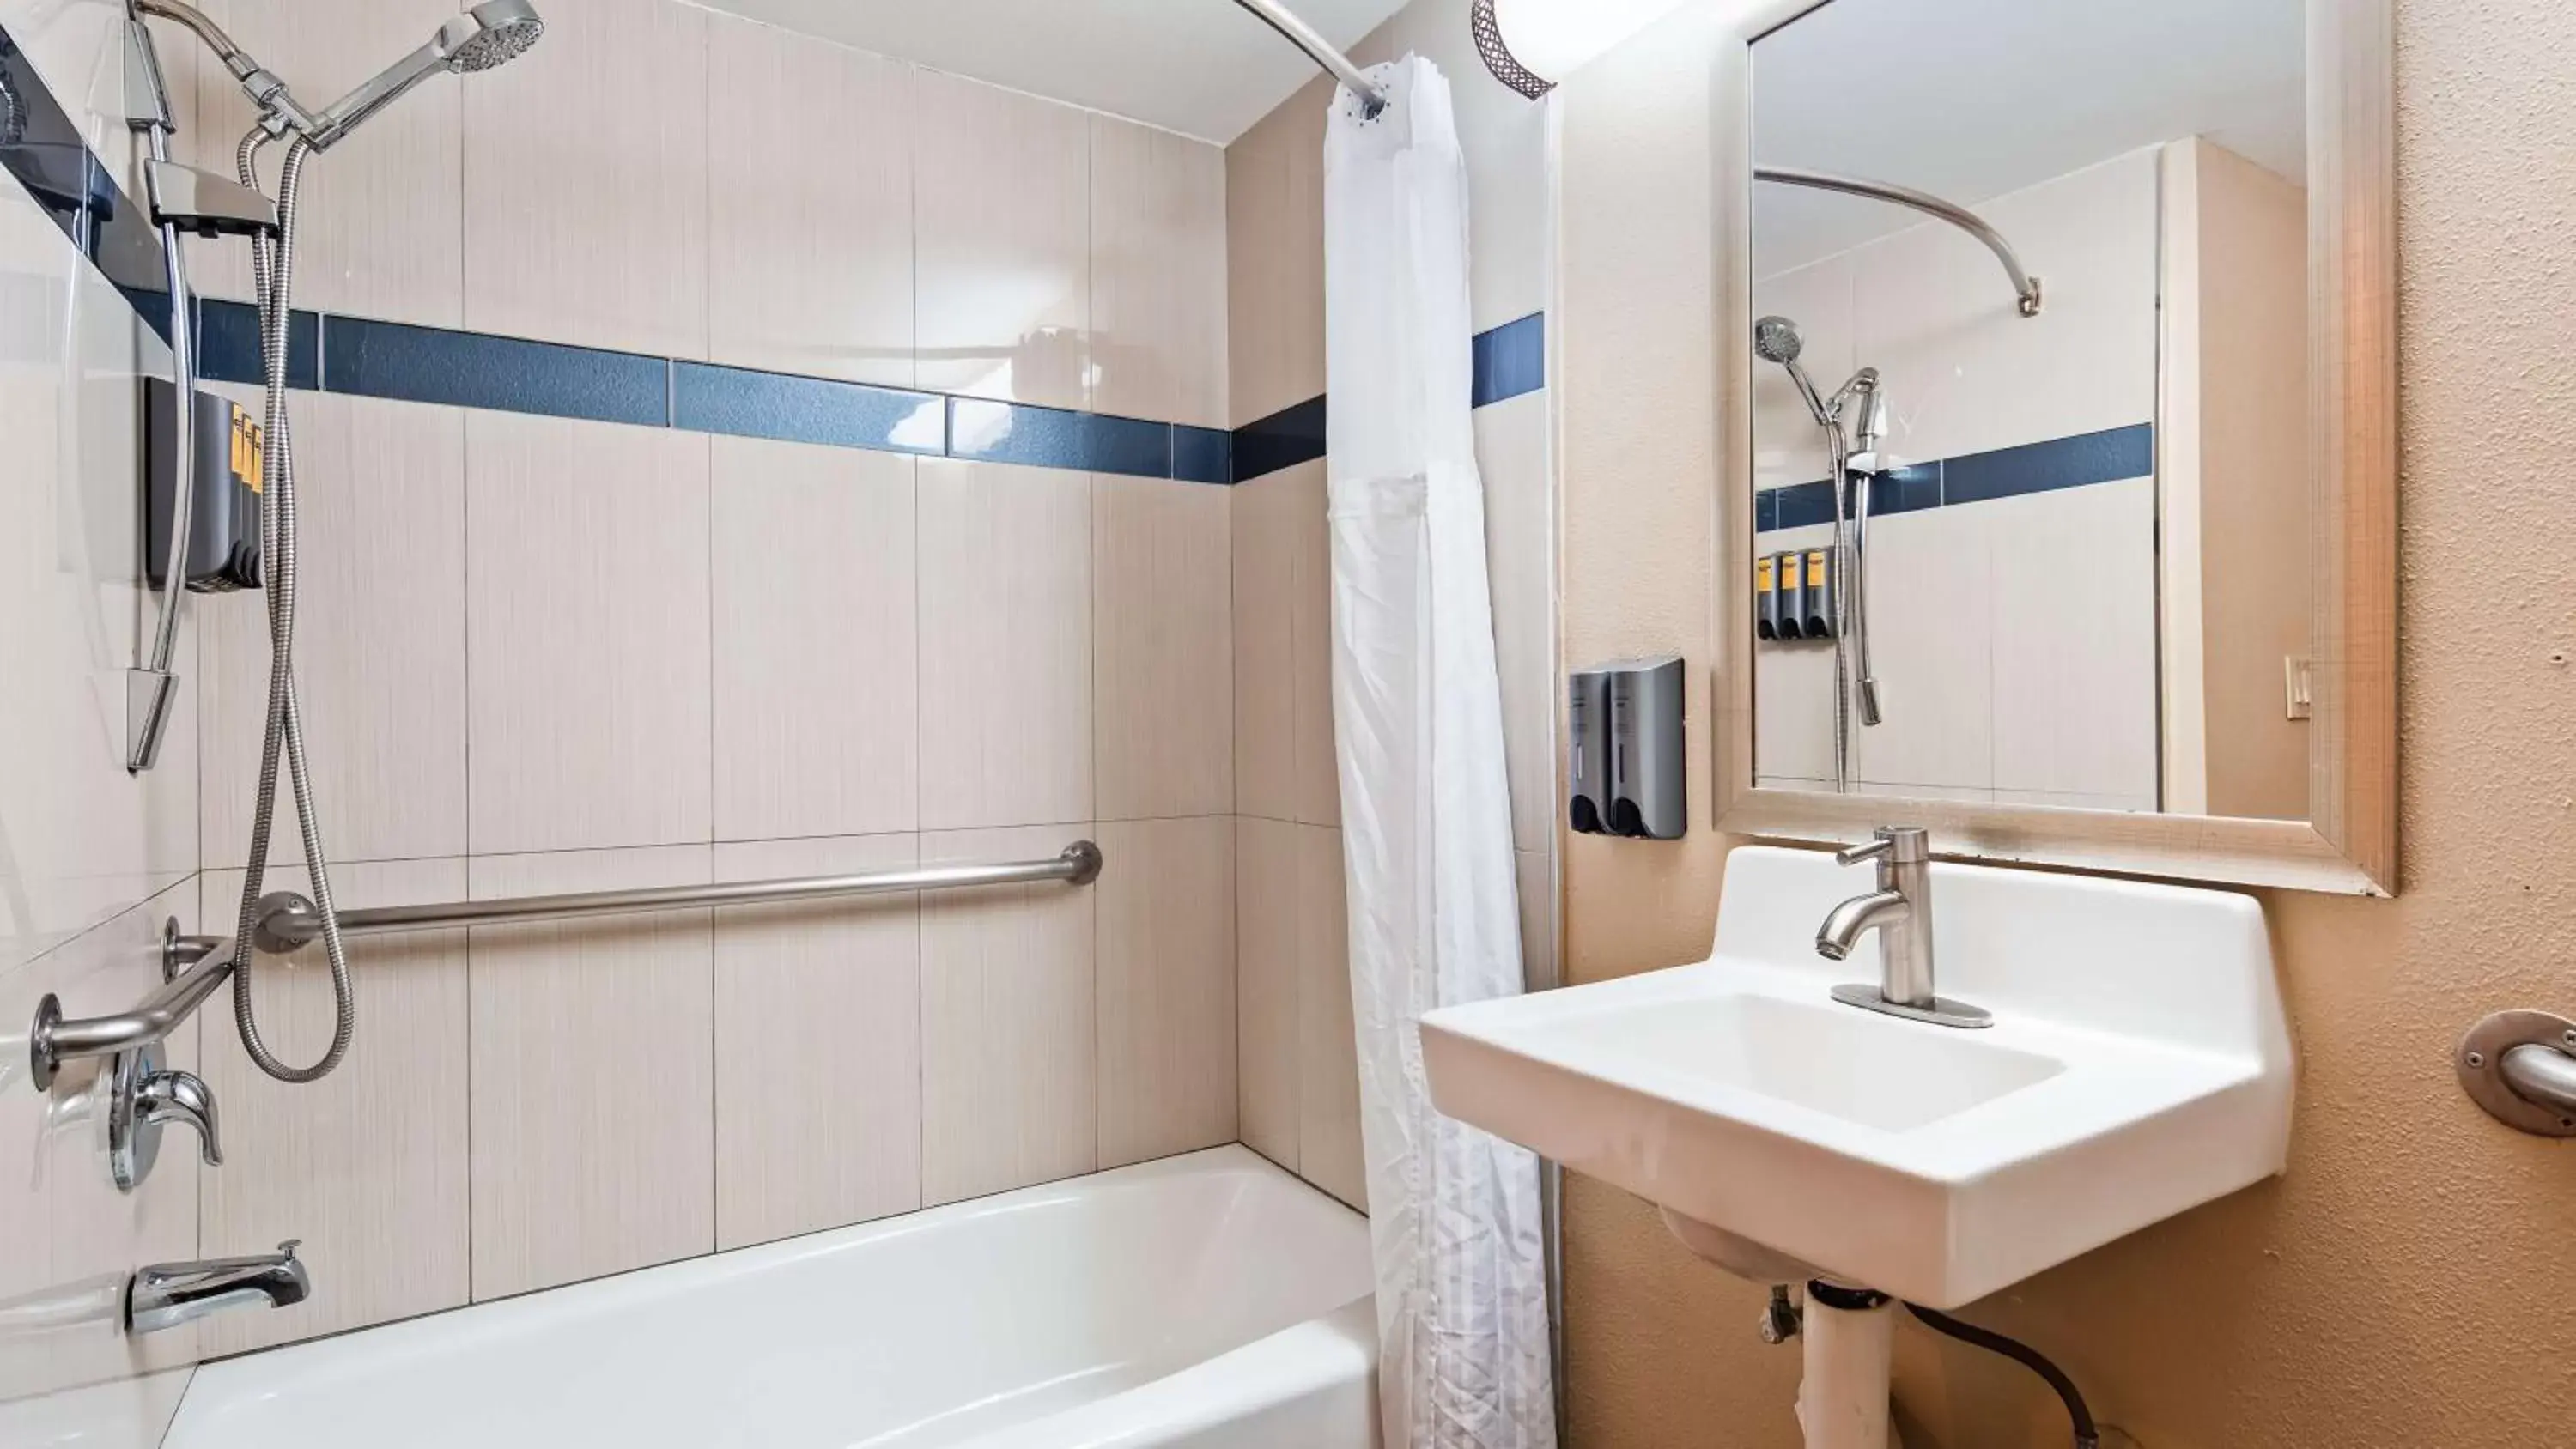 Photo of the whole room, Bathroom in Best Western Plus - Anaheim Orange County Hotel